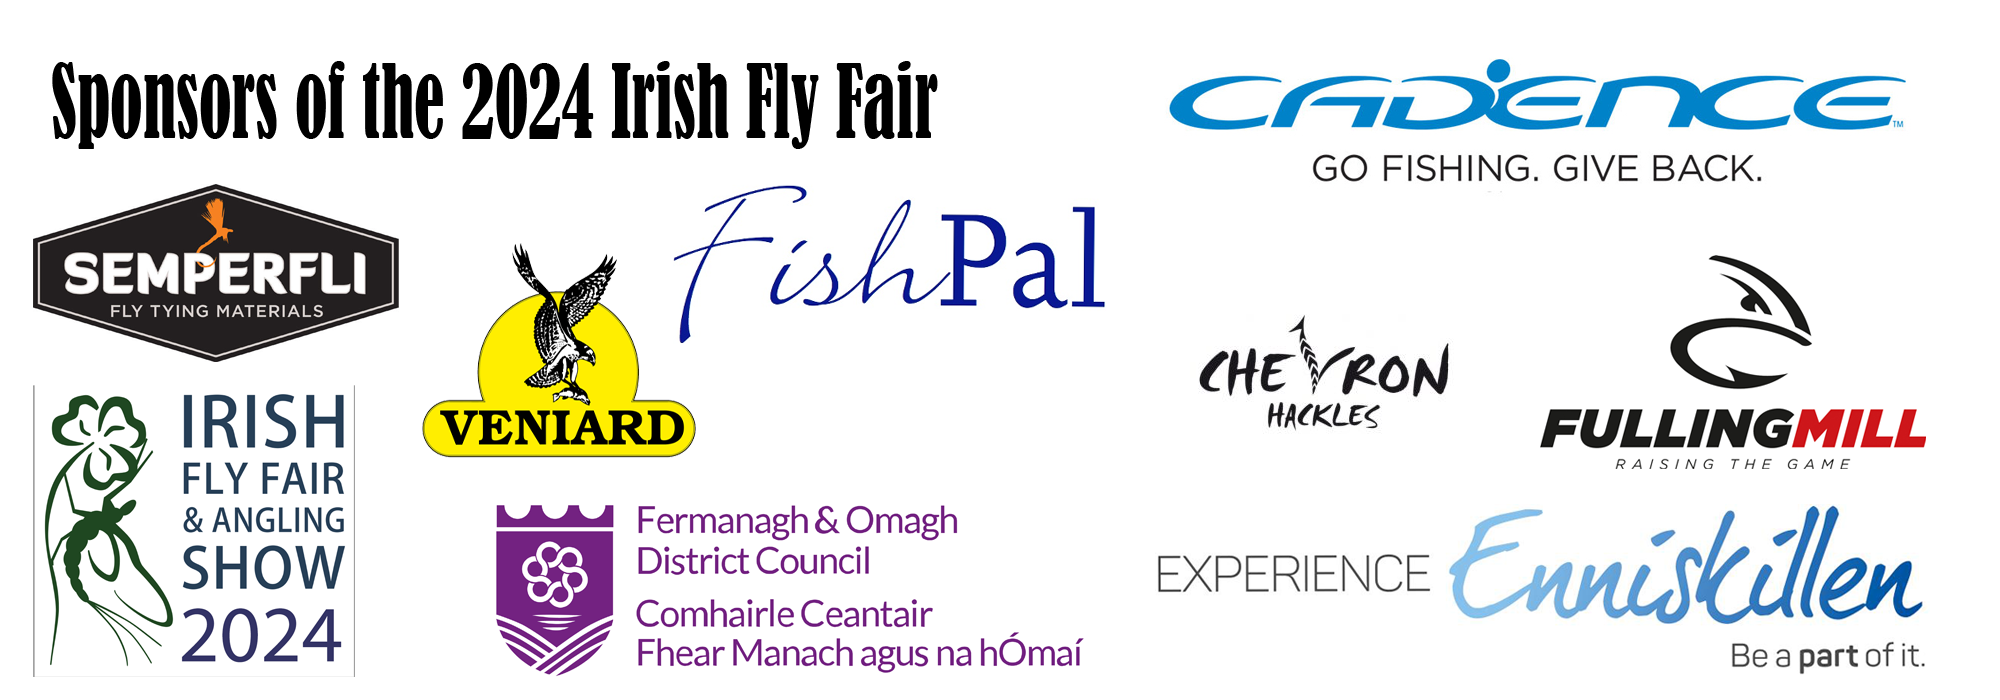 Partridge, Cadence,  Fishpal, Veniard, Regal Vise, Ahrex Hooks & Semperfli Sponsors of The Irish Fly Fair 2024